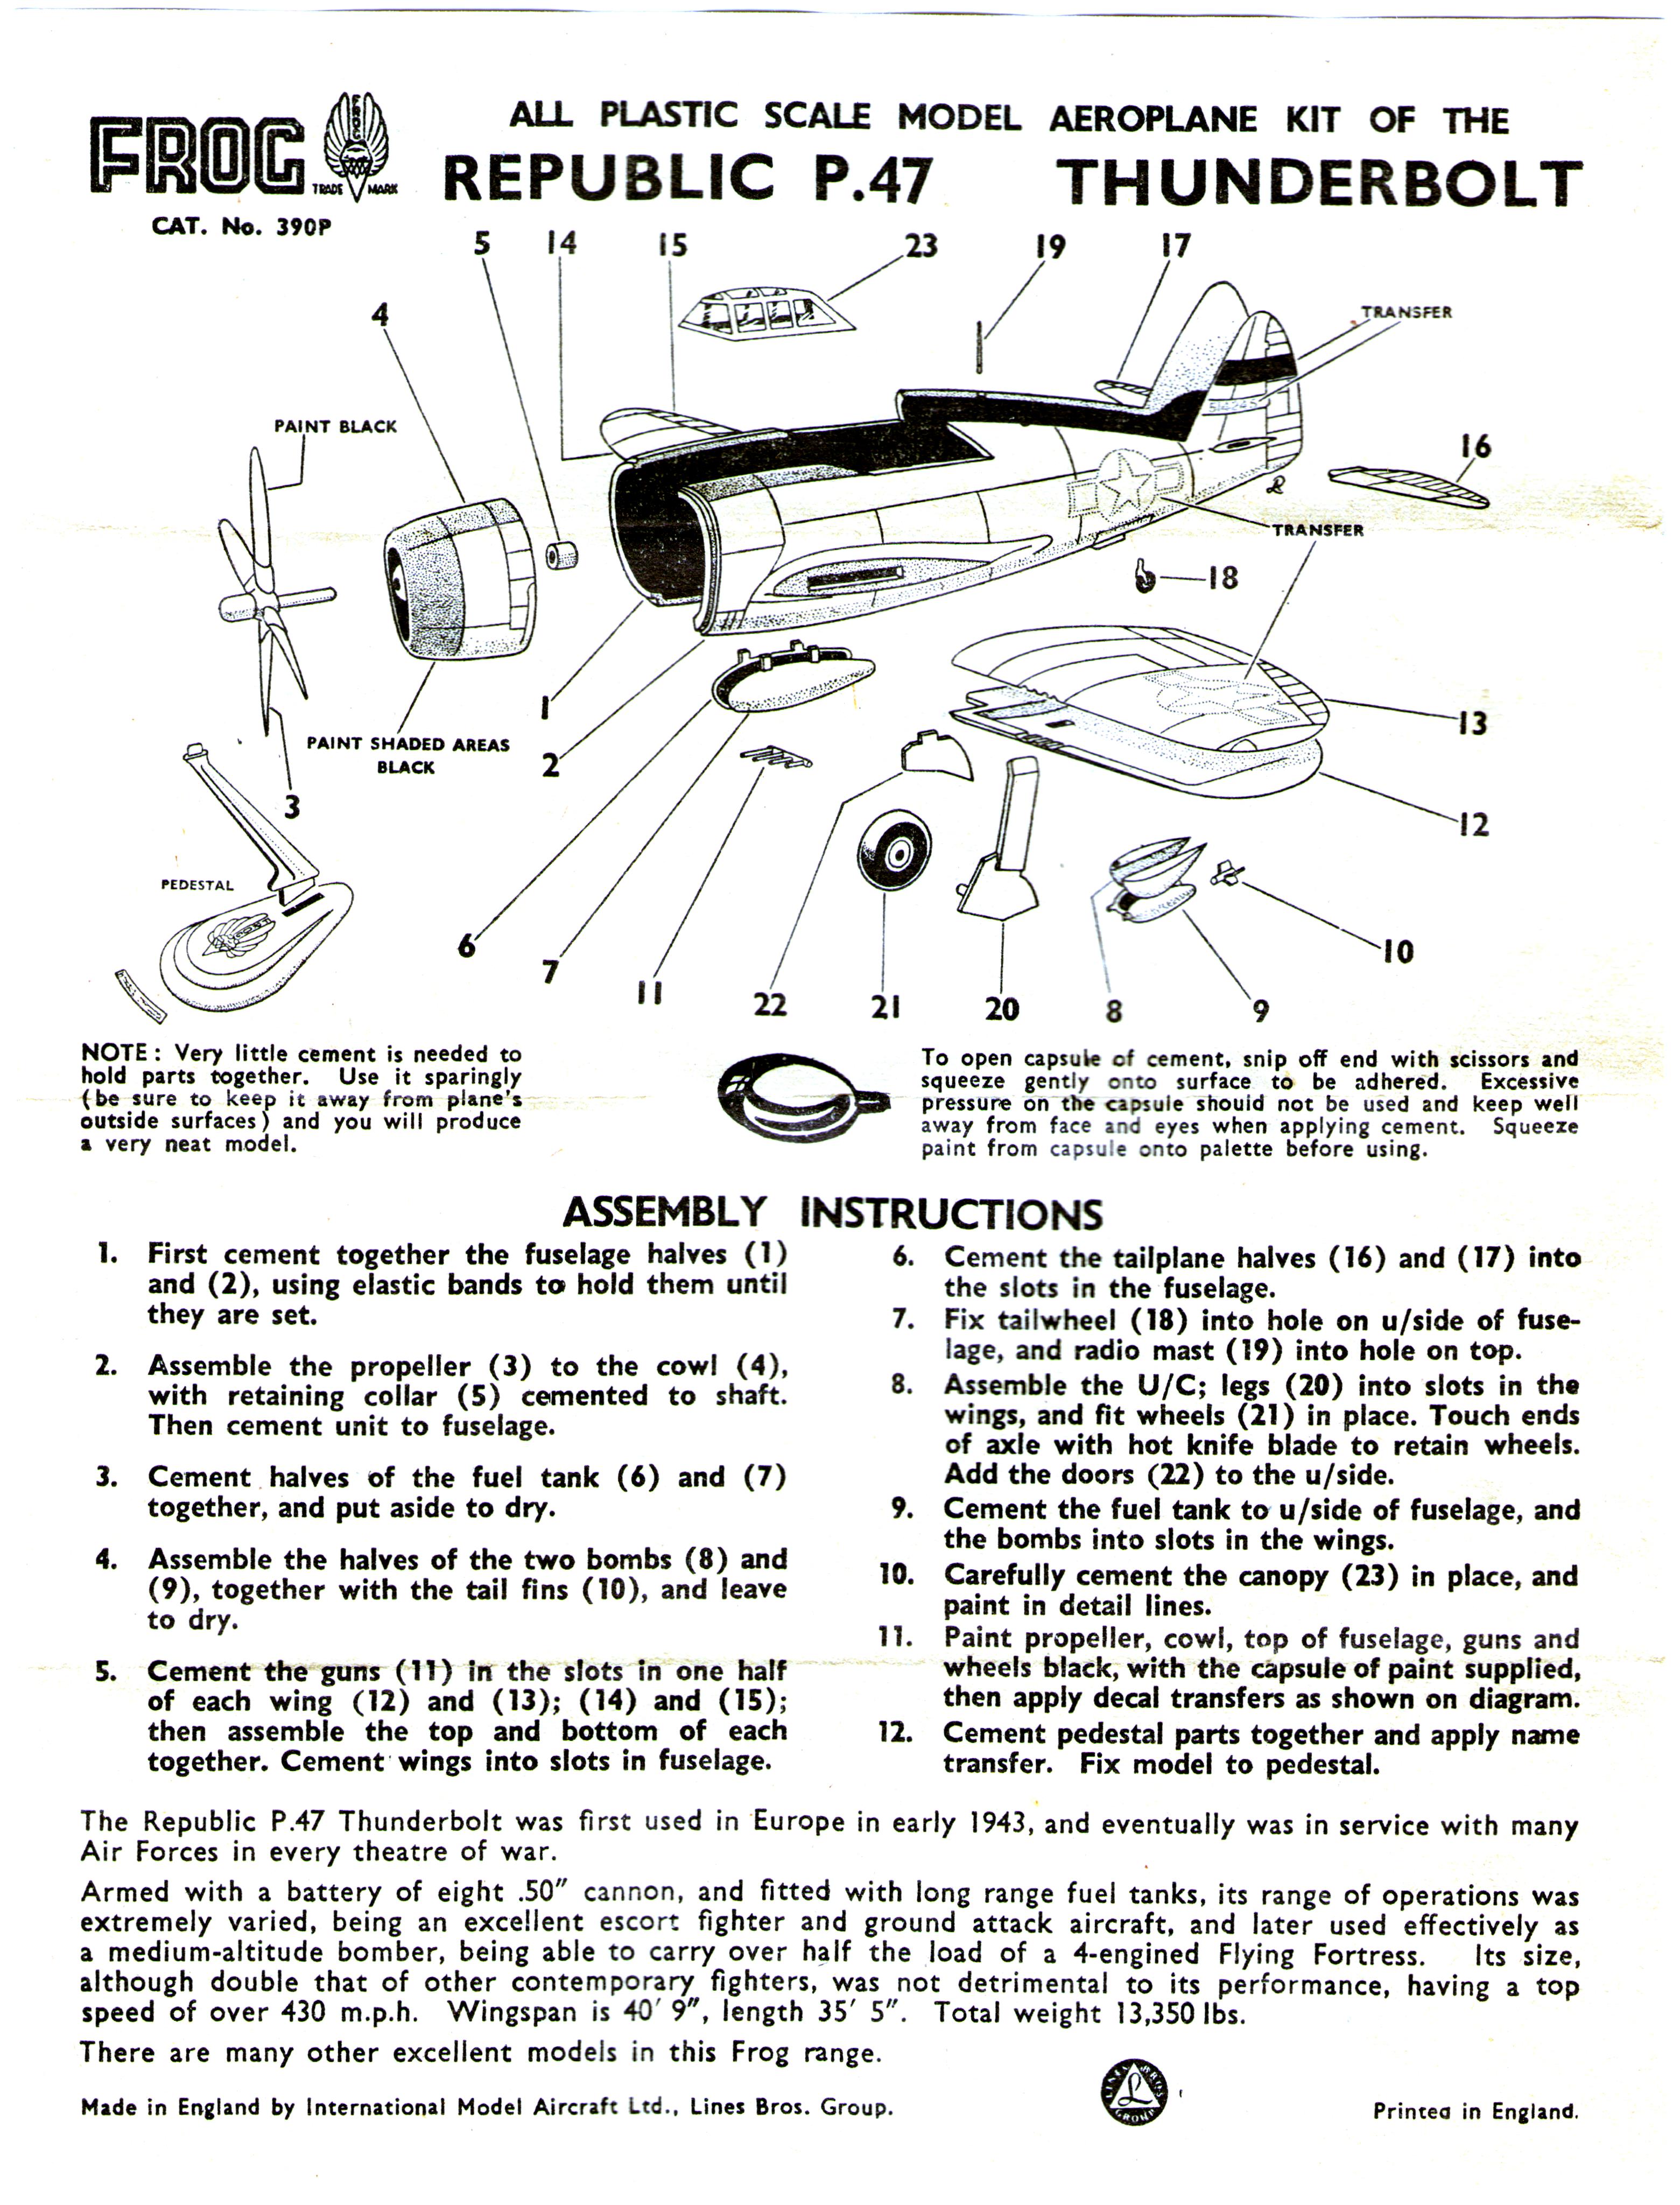 Инструкция по сборке FROG 390P Republic Thunderbolt, IMA, 1959